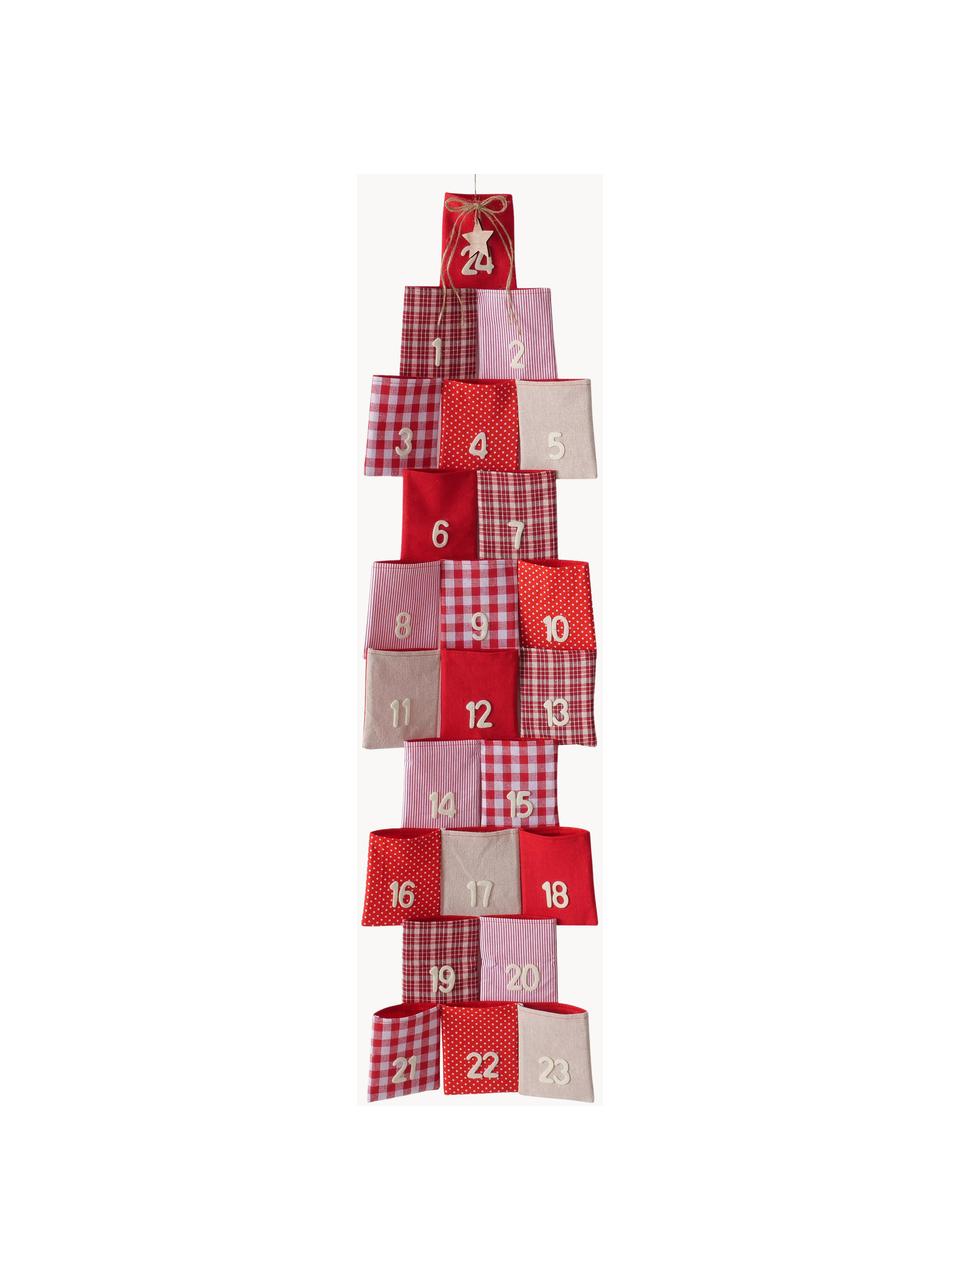 Adventskalender Edala H 110 cm, Baumwolle, Polyester-Filz, Rot, Weiß, Beige, B 29 x H 110 cm